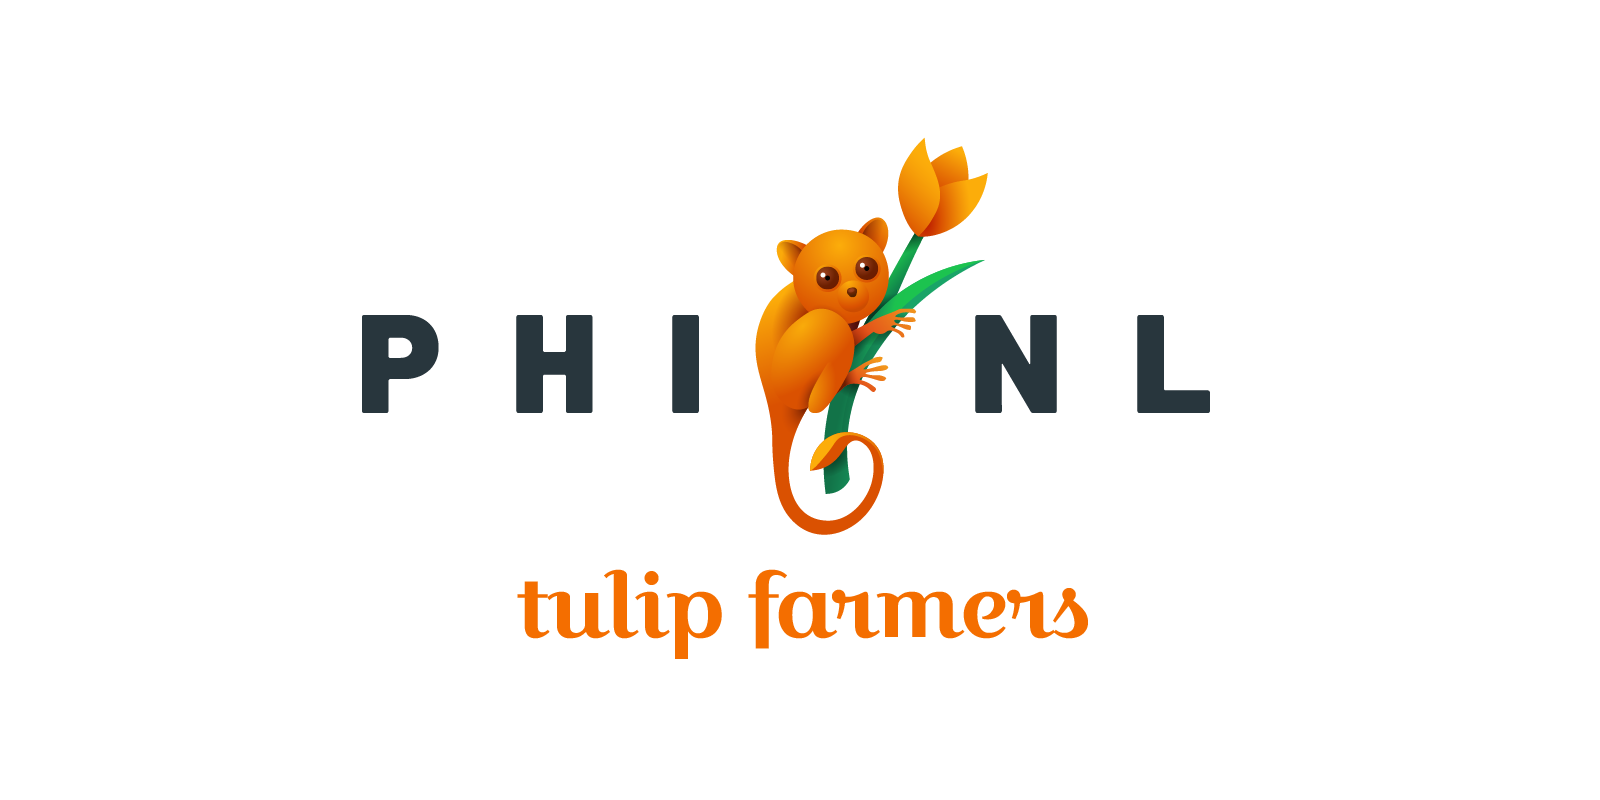 Phinl - We love tulips